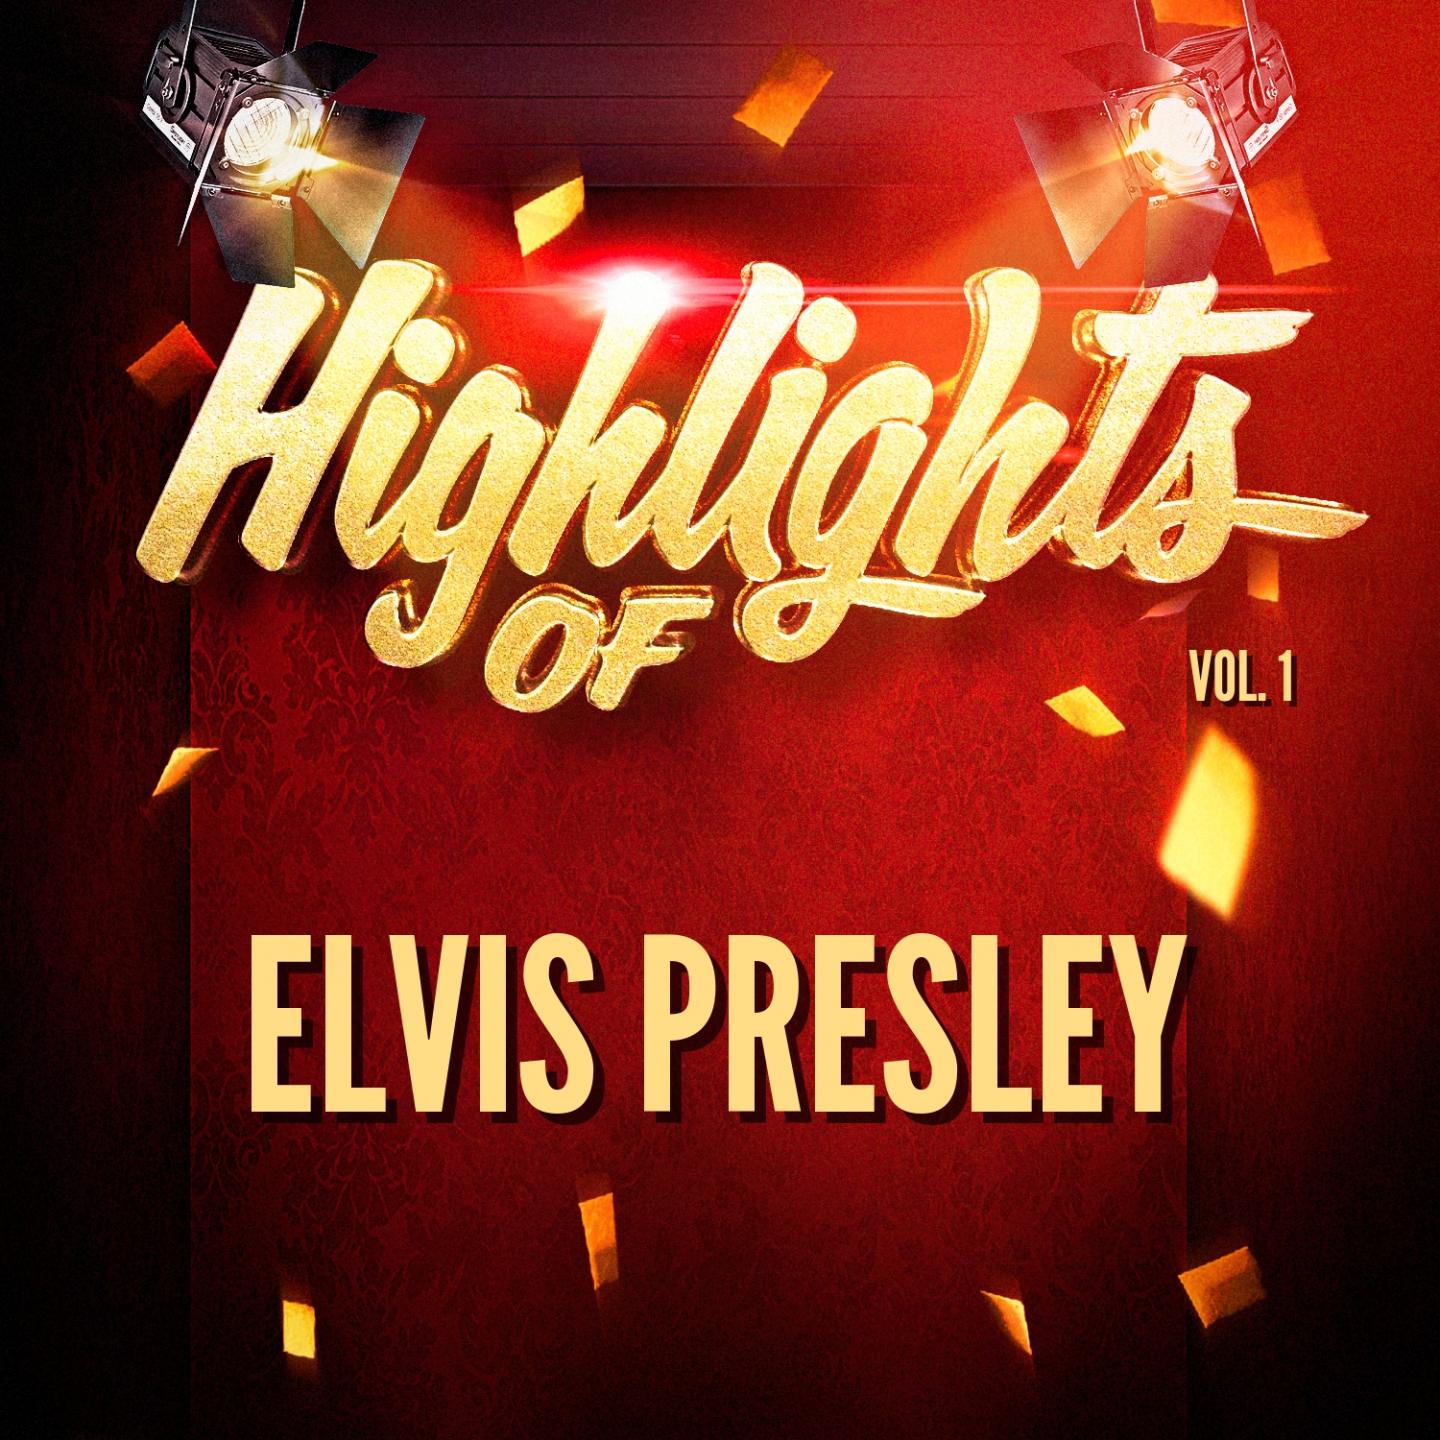 Highlights of Elvis Presley, Vol. 1